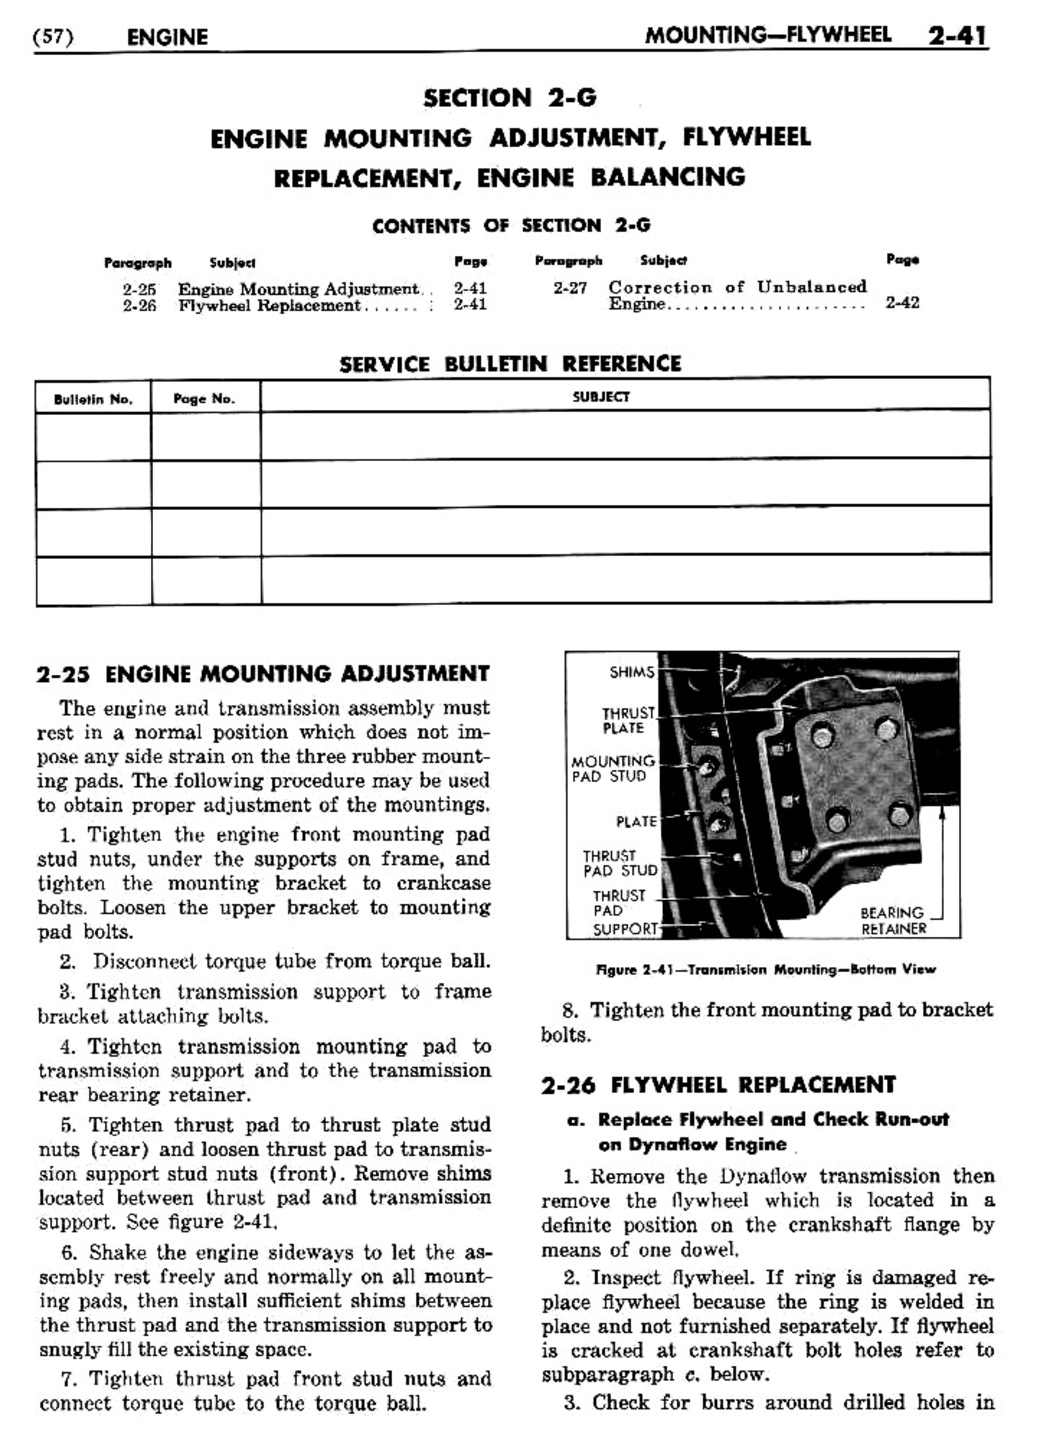 n_03 1954 Buick Shop Manual - Engine-041-041.jpg